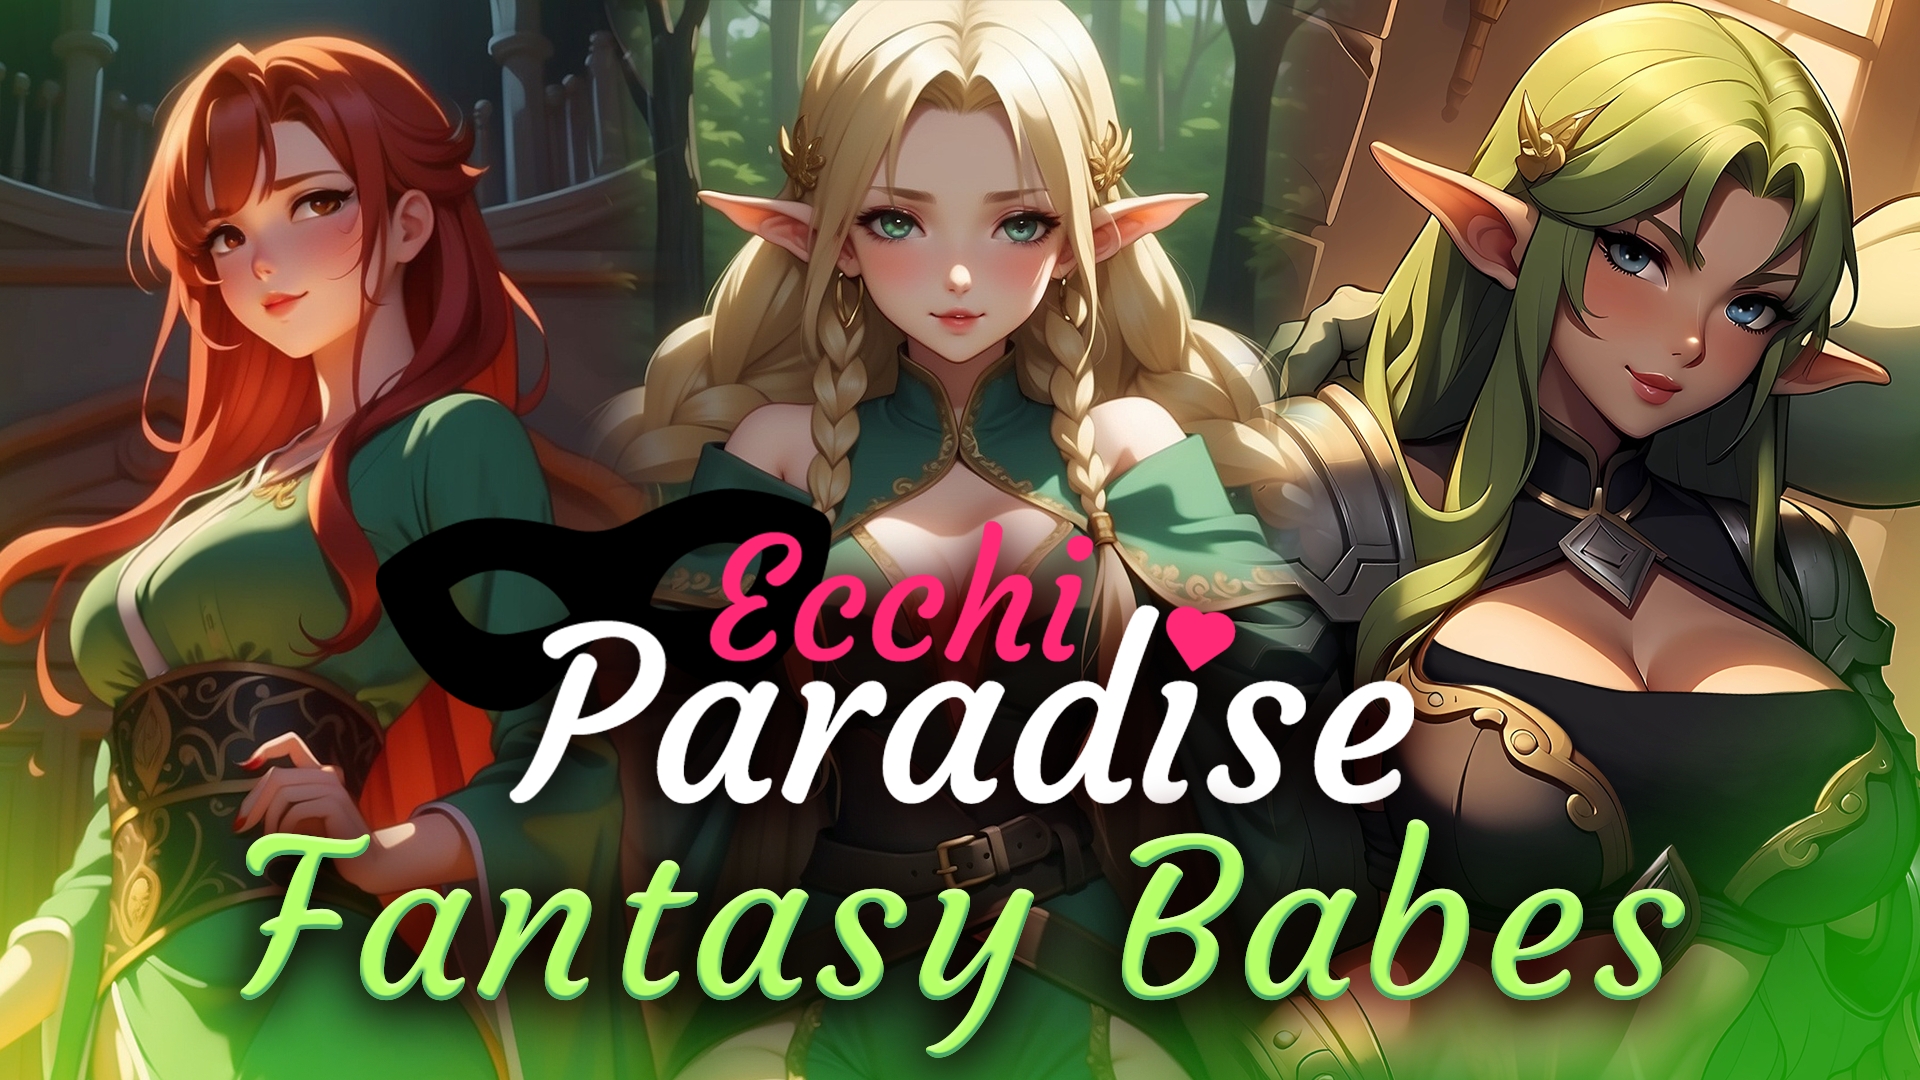 Ecchi Paradise: Fantasy Babes